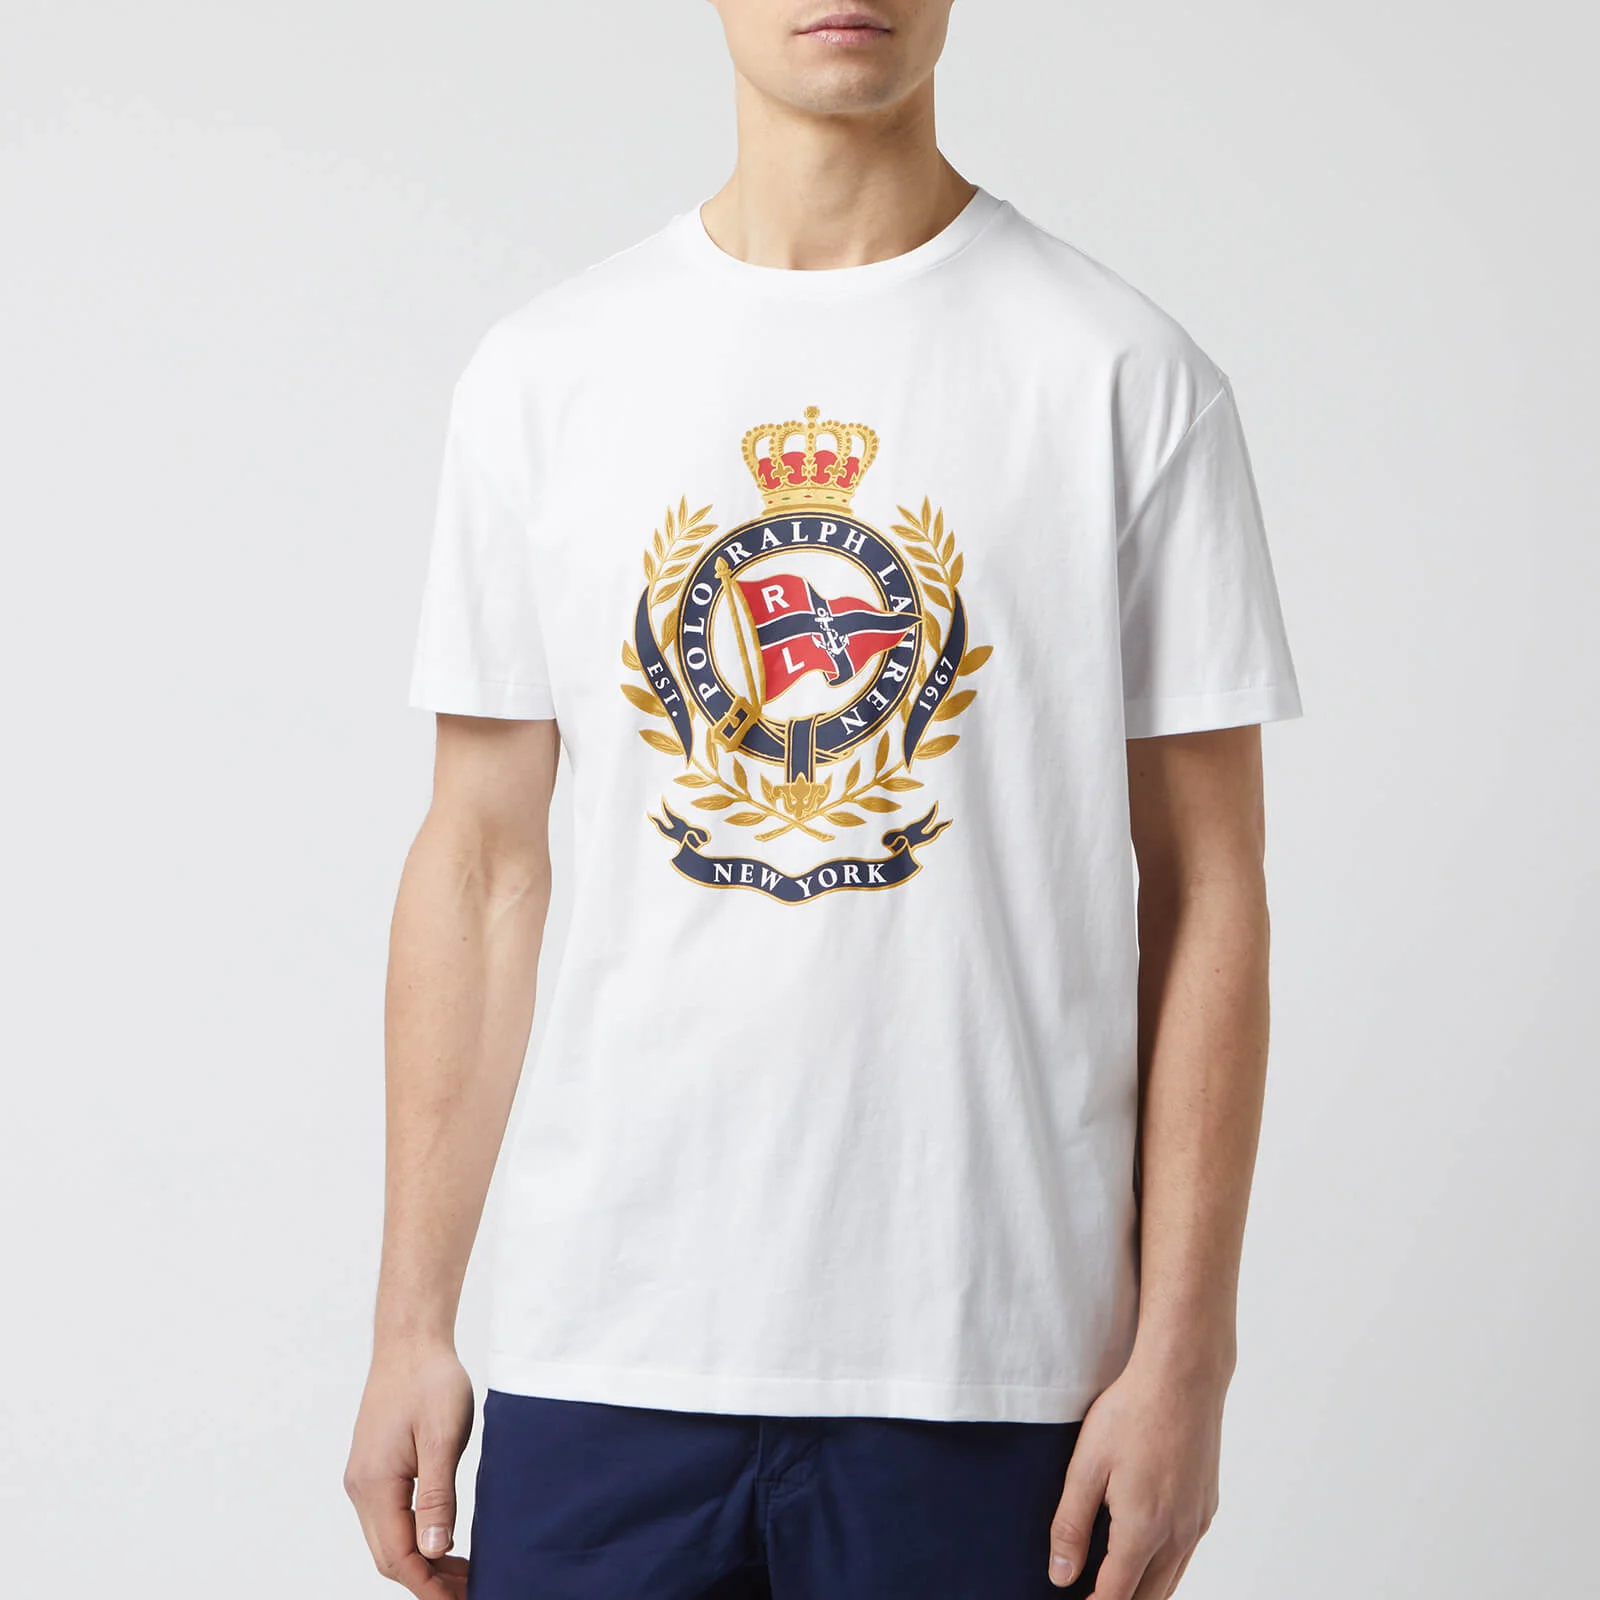 Polo Ralph Lauren Men's Newport Crest T-Shirt - White Image 1